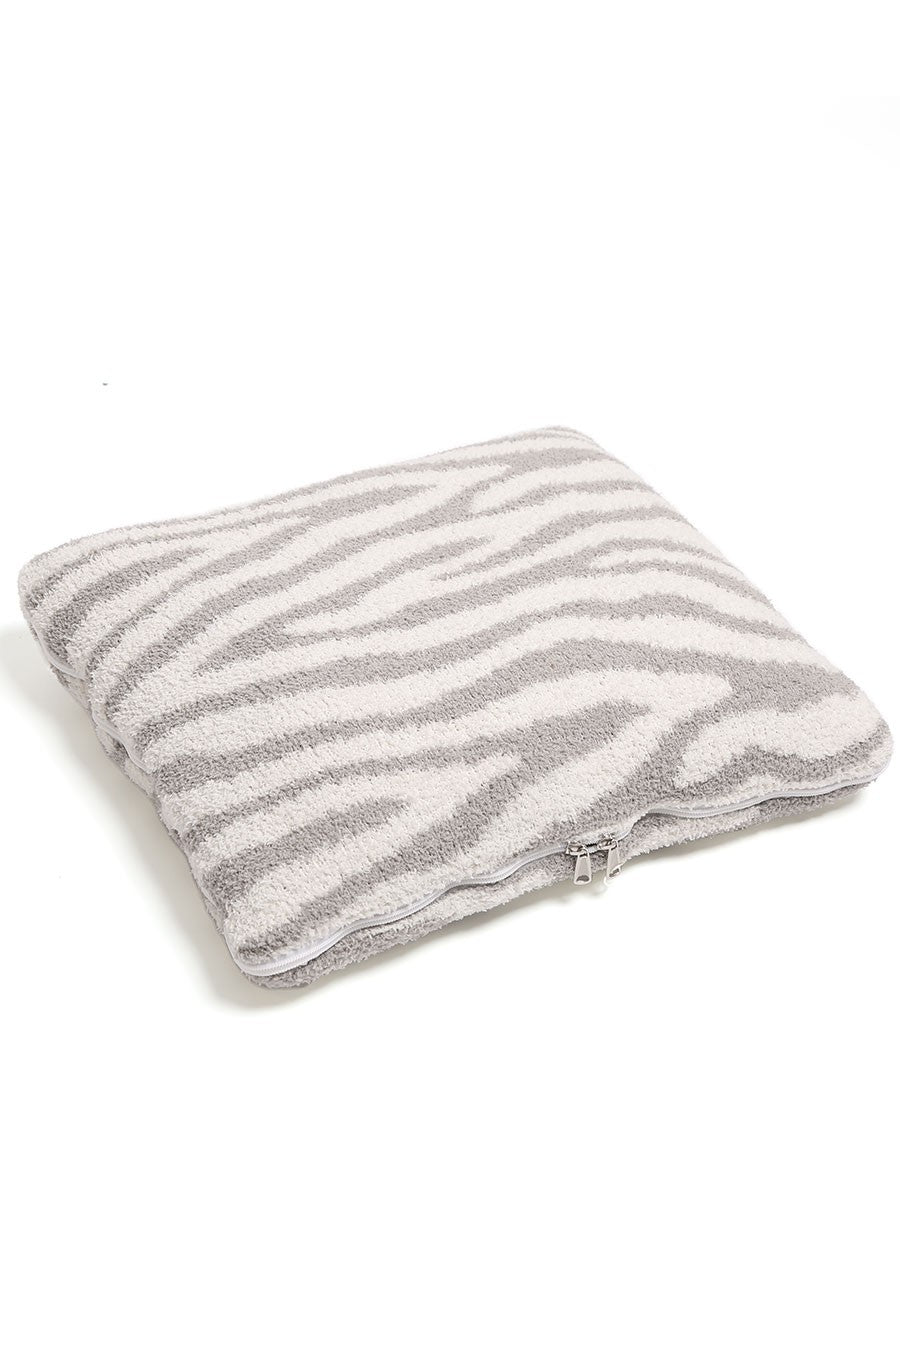 Fluffy Zebra Zip Up Blanket - Gray